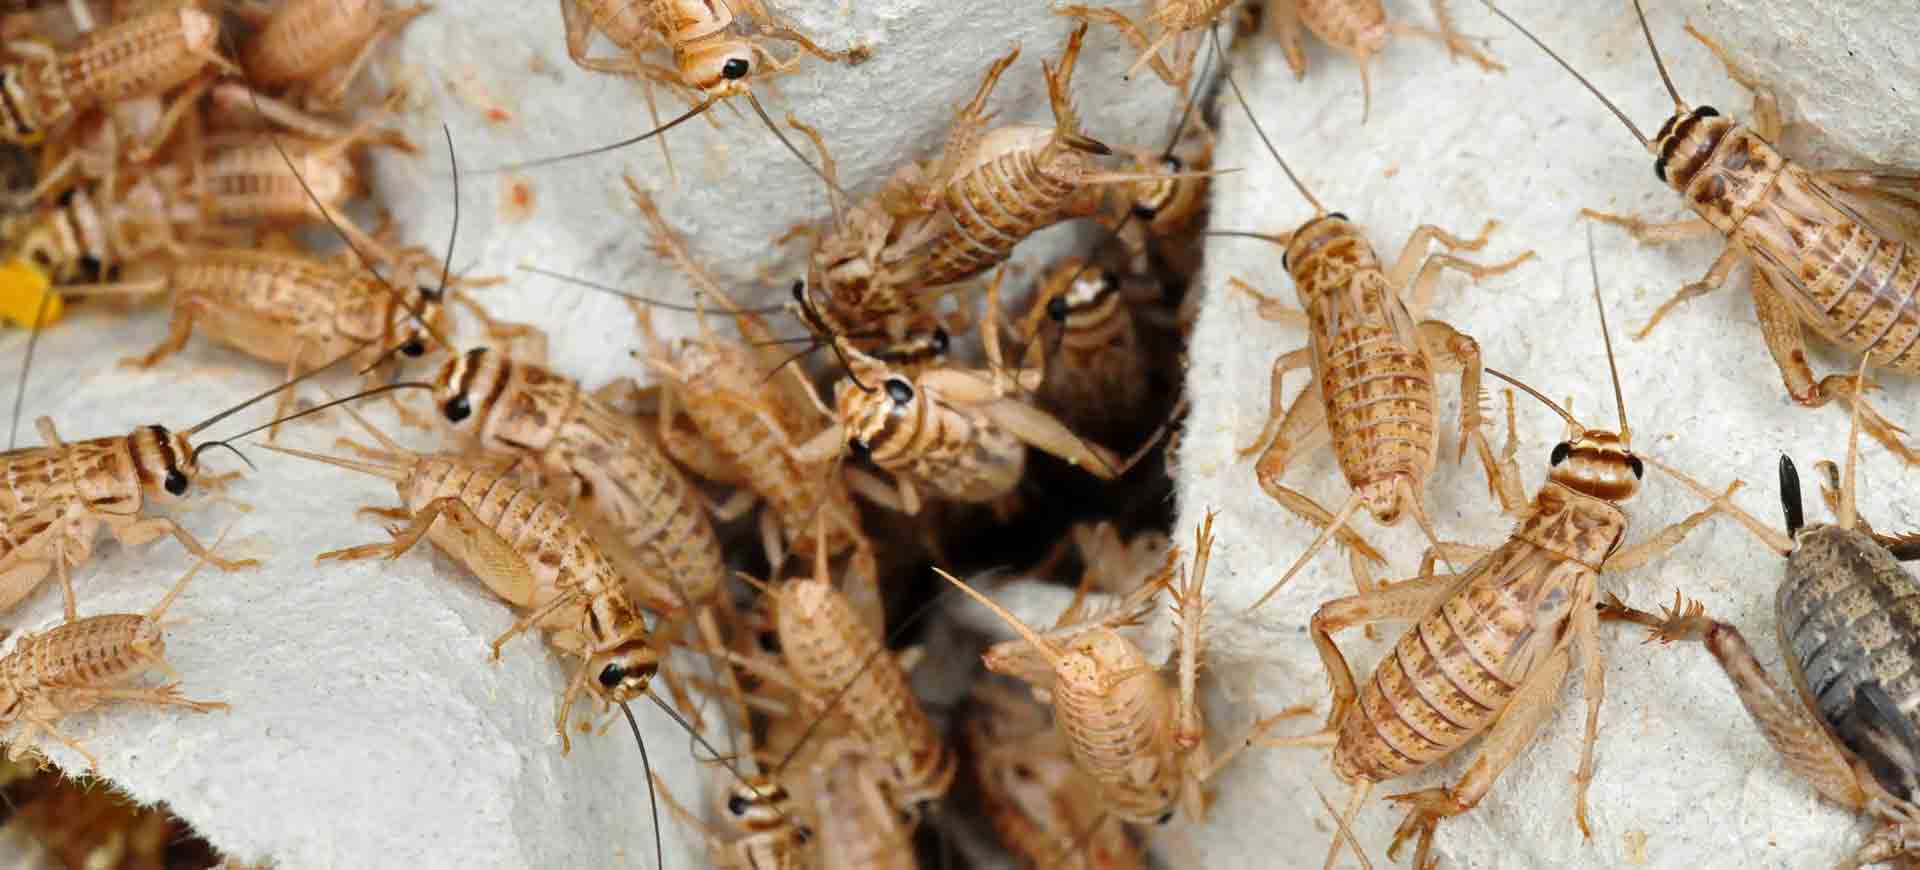 cricket pest control spring valley